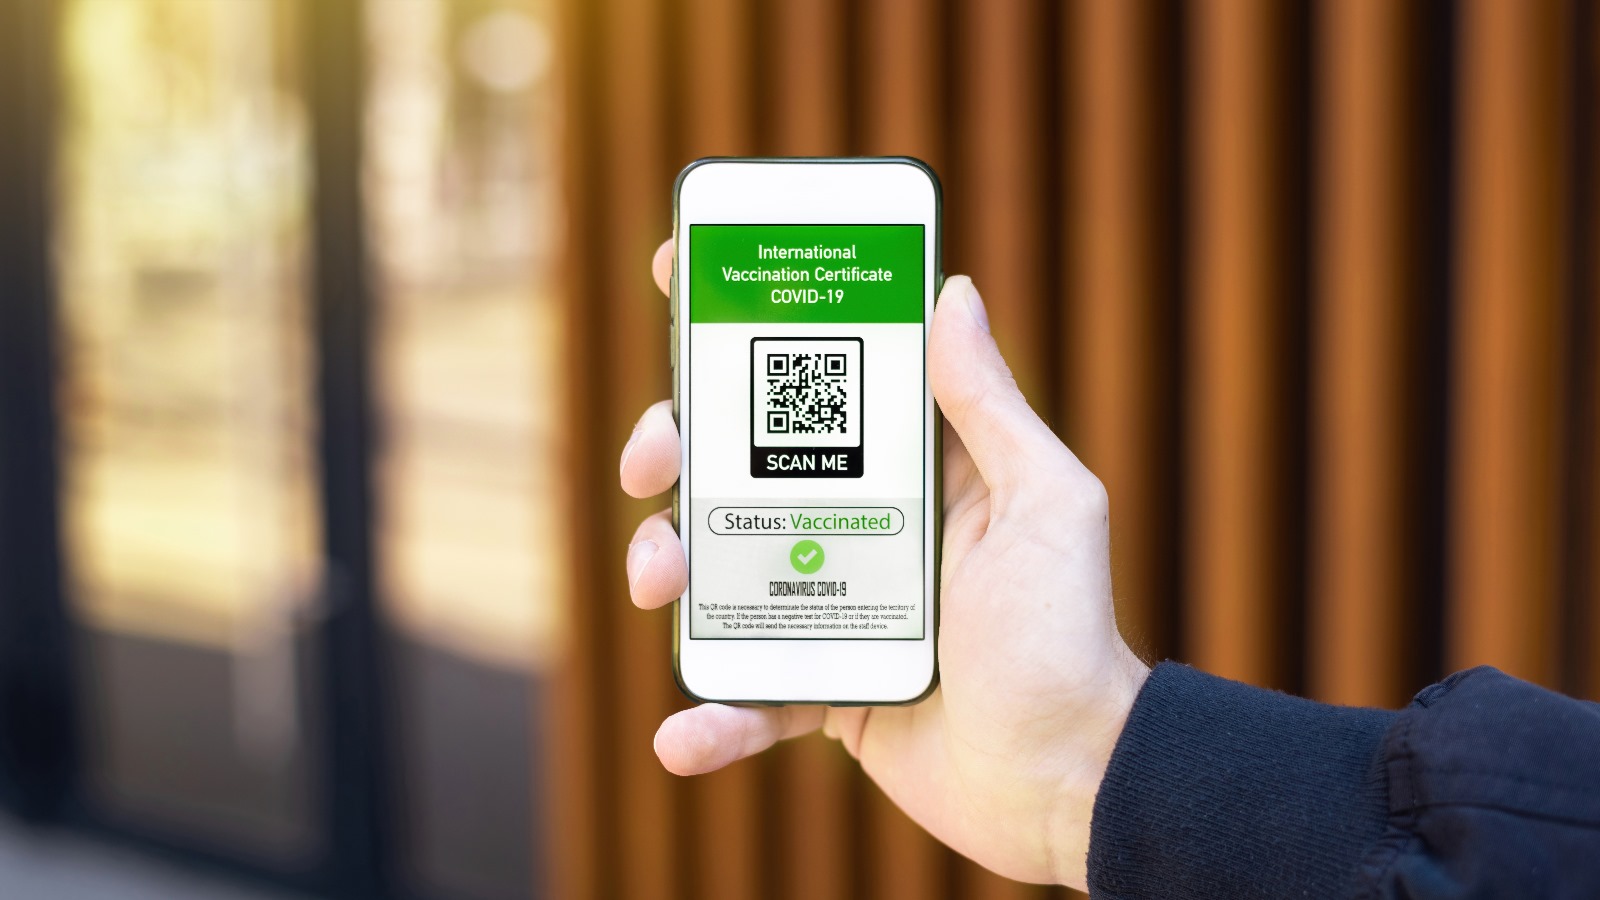 WeChat QR Kodu Tarama Nasıl Yapılır?